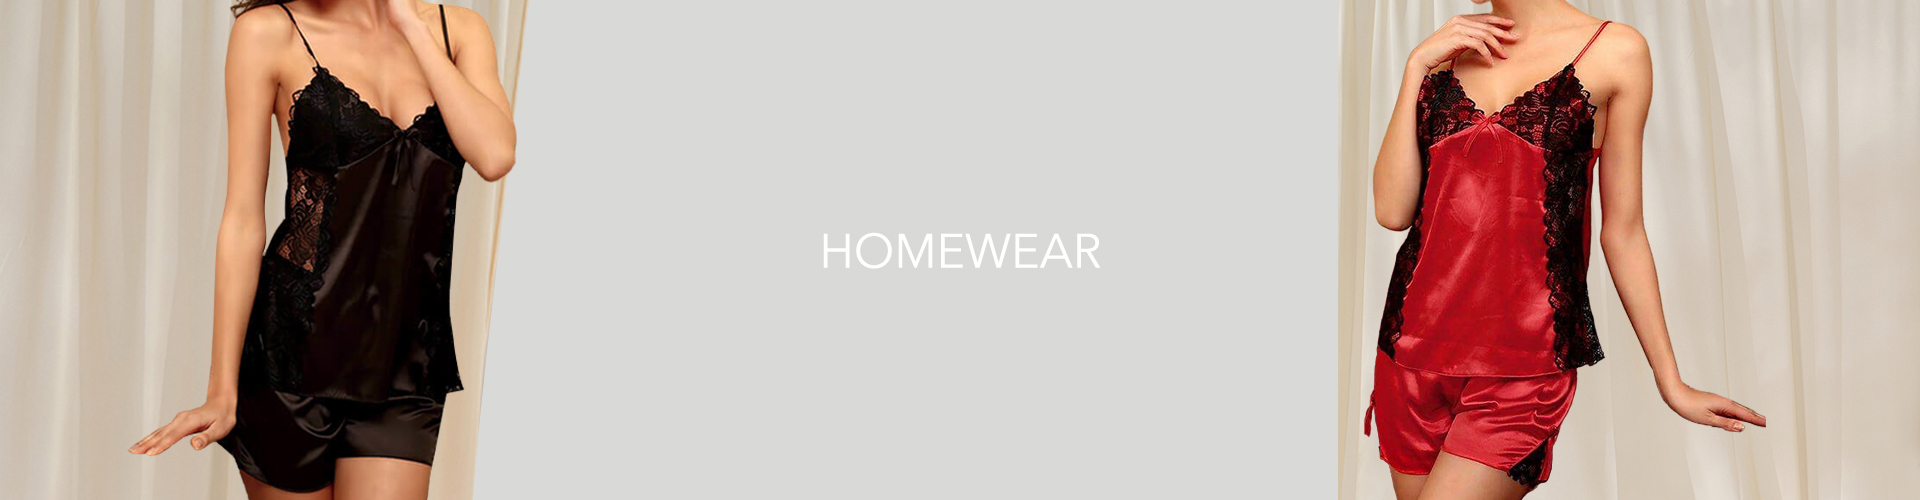 Homewear